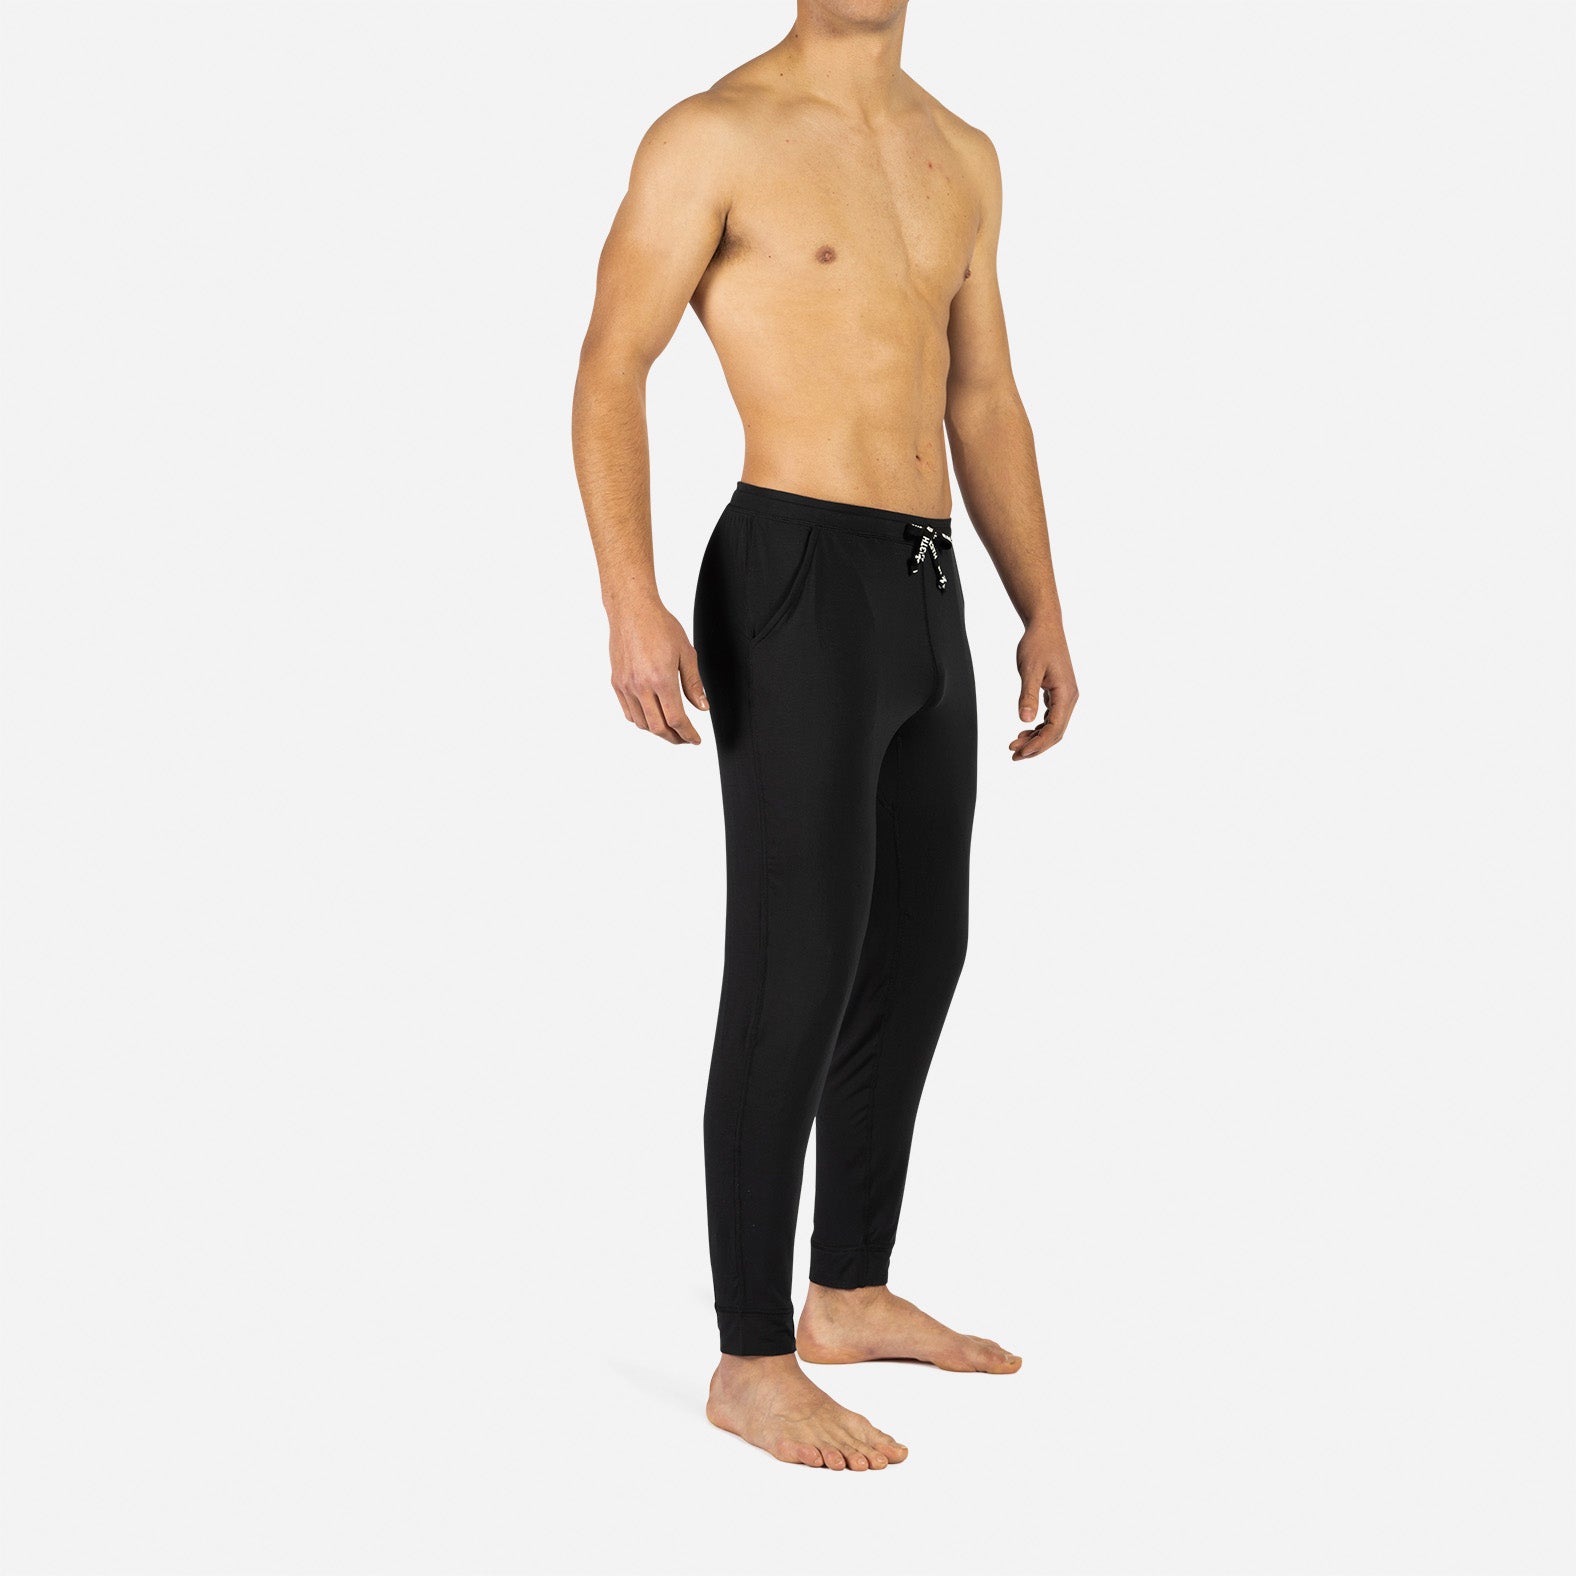 PJ Long: Black  BN3TH Underwear –